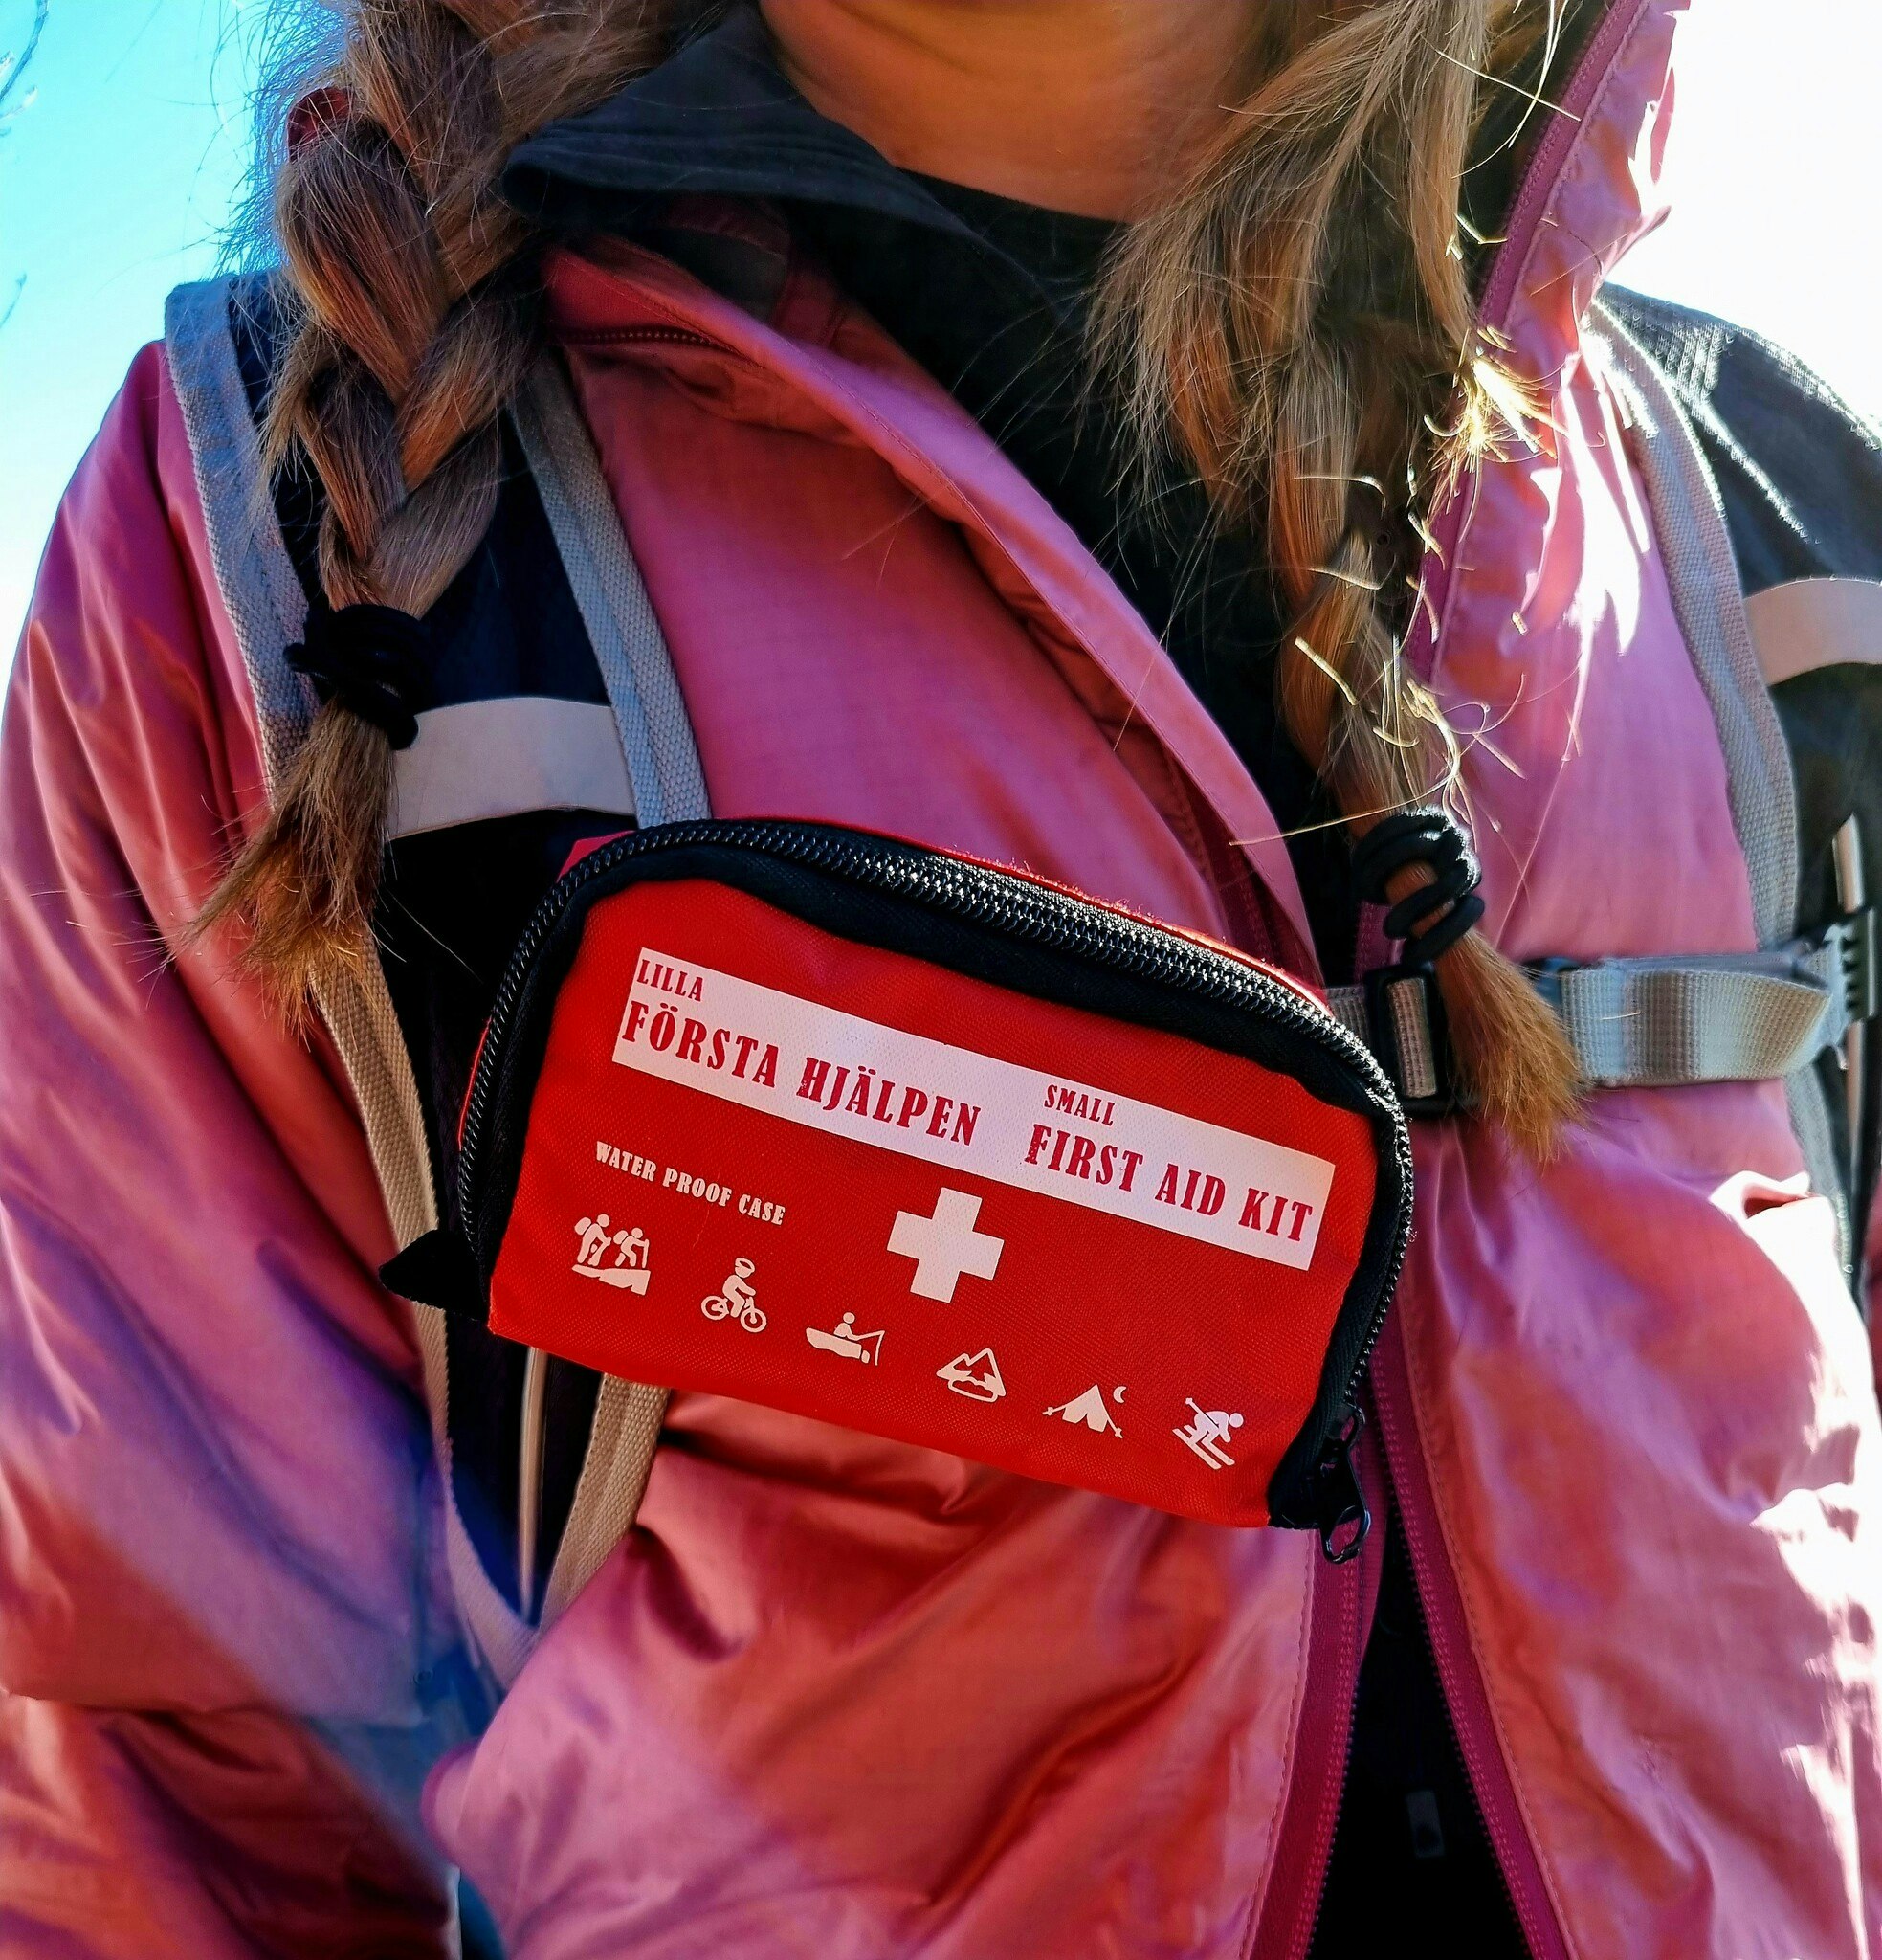 Första Hjälpen/First Aid Kit